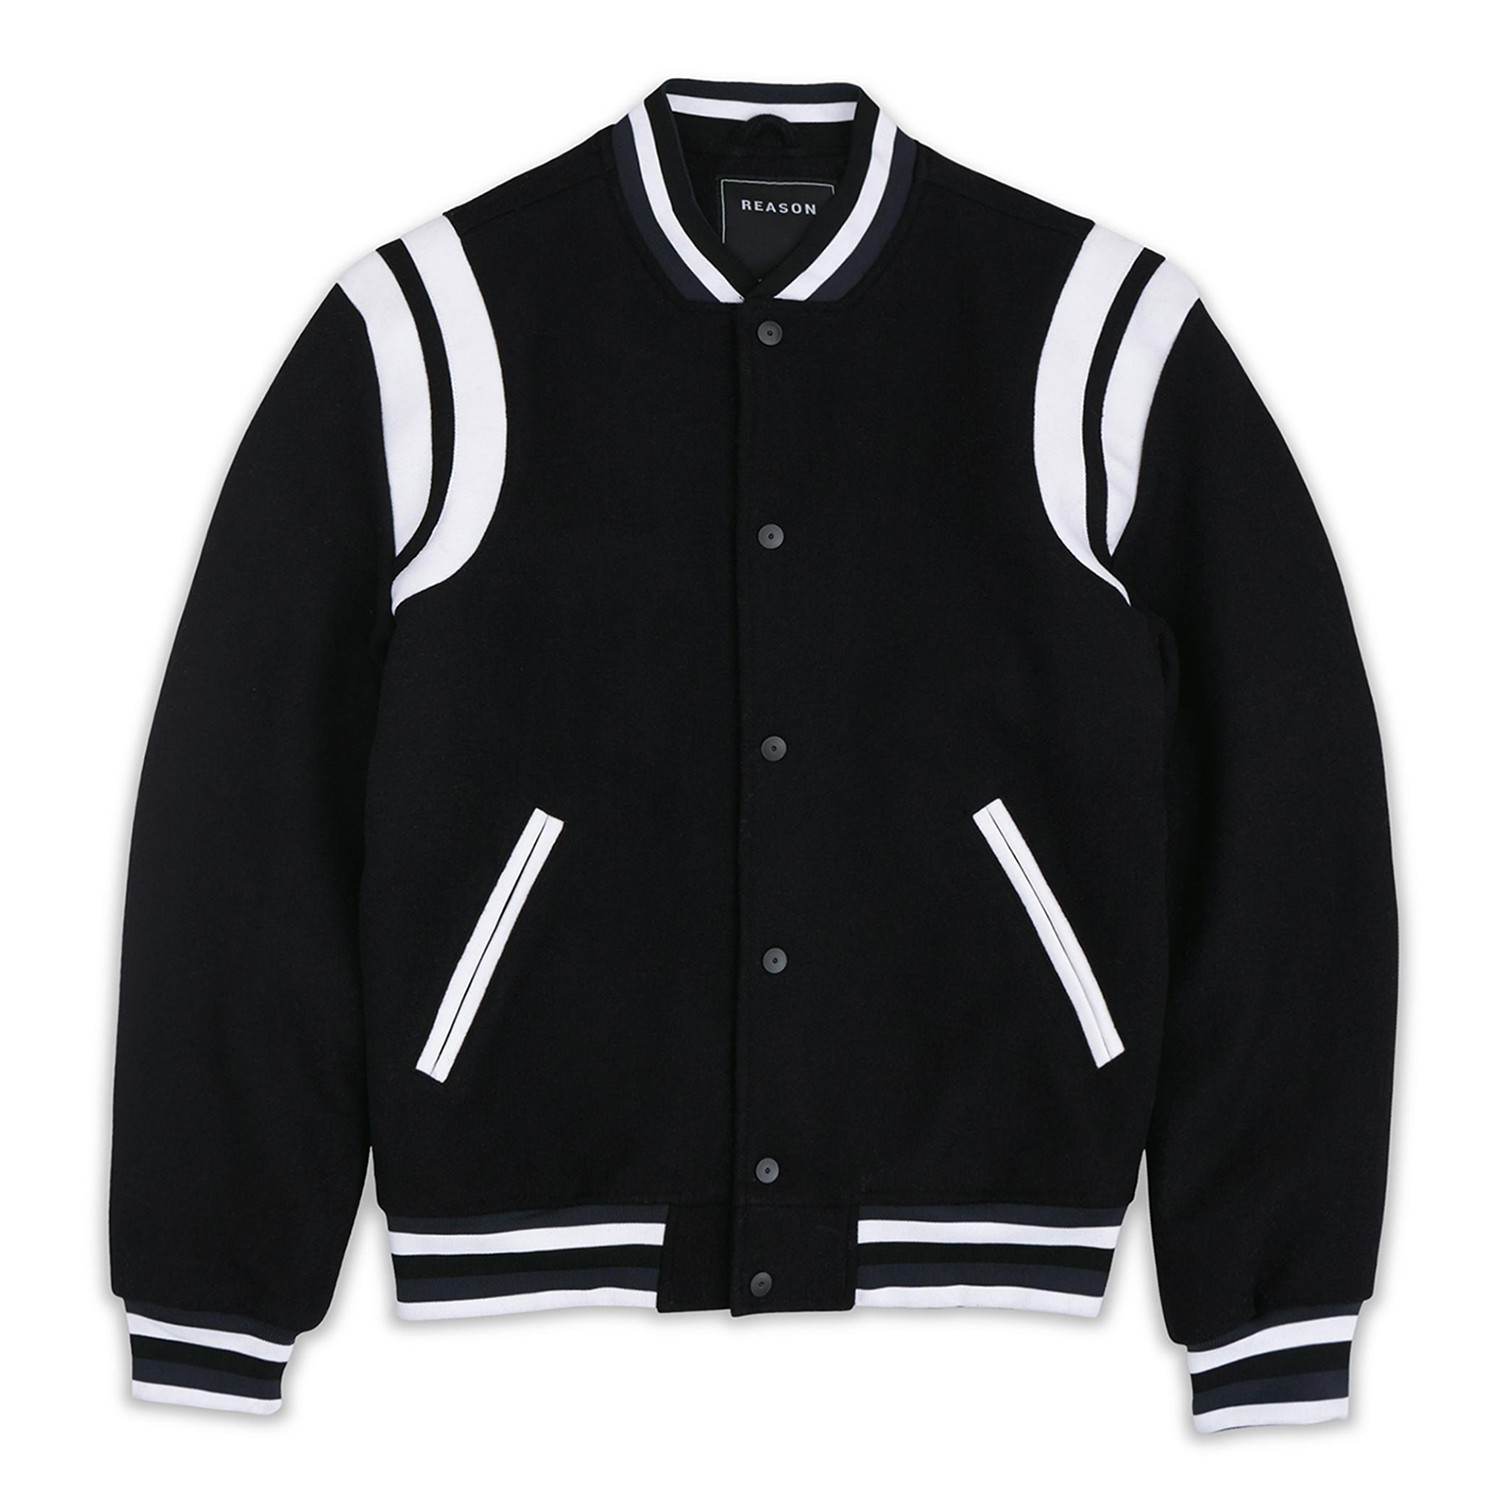 Varsity Jacket : Urban Outfitters Vintage Grey Varsity Jacket in Gray